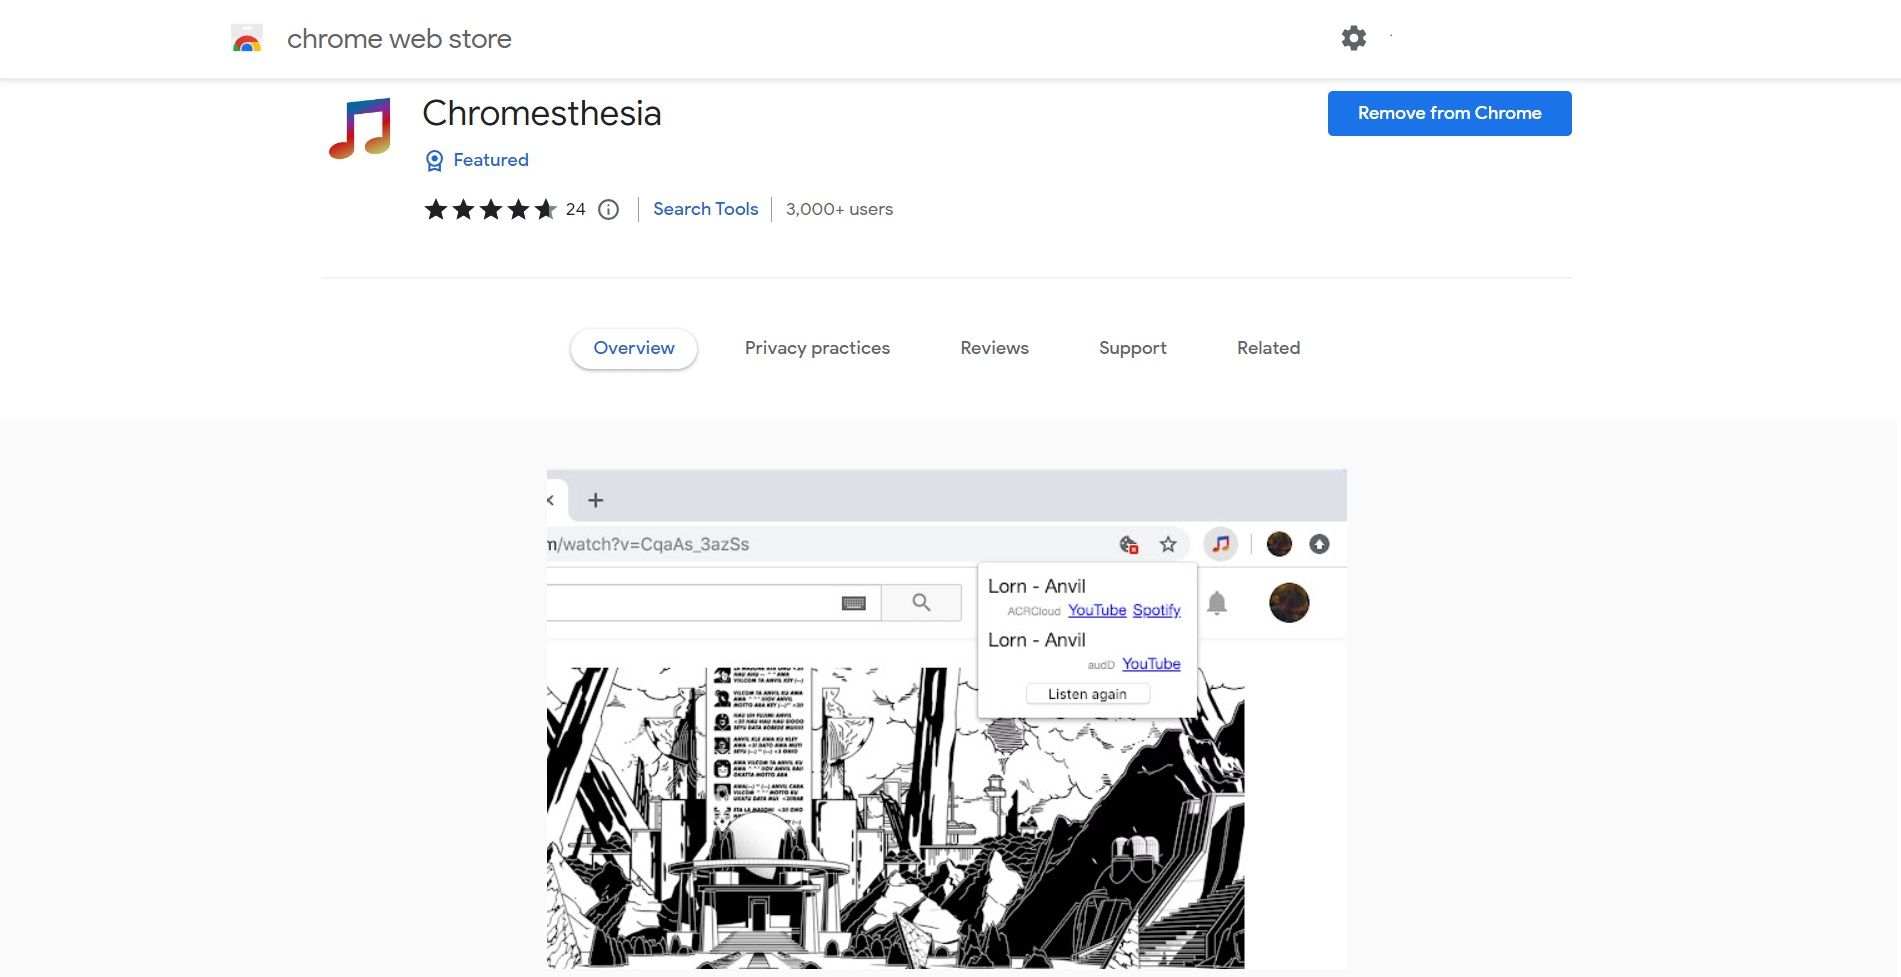 Chromesthesia page on Chrome web store